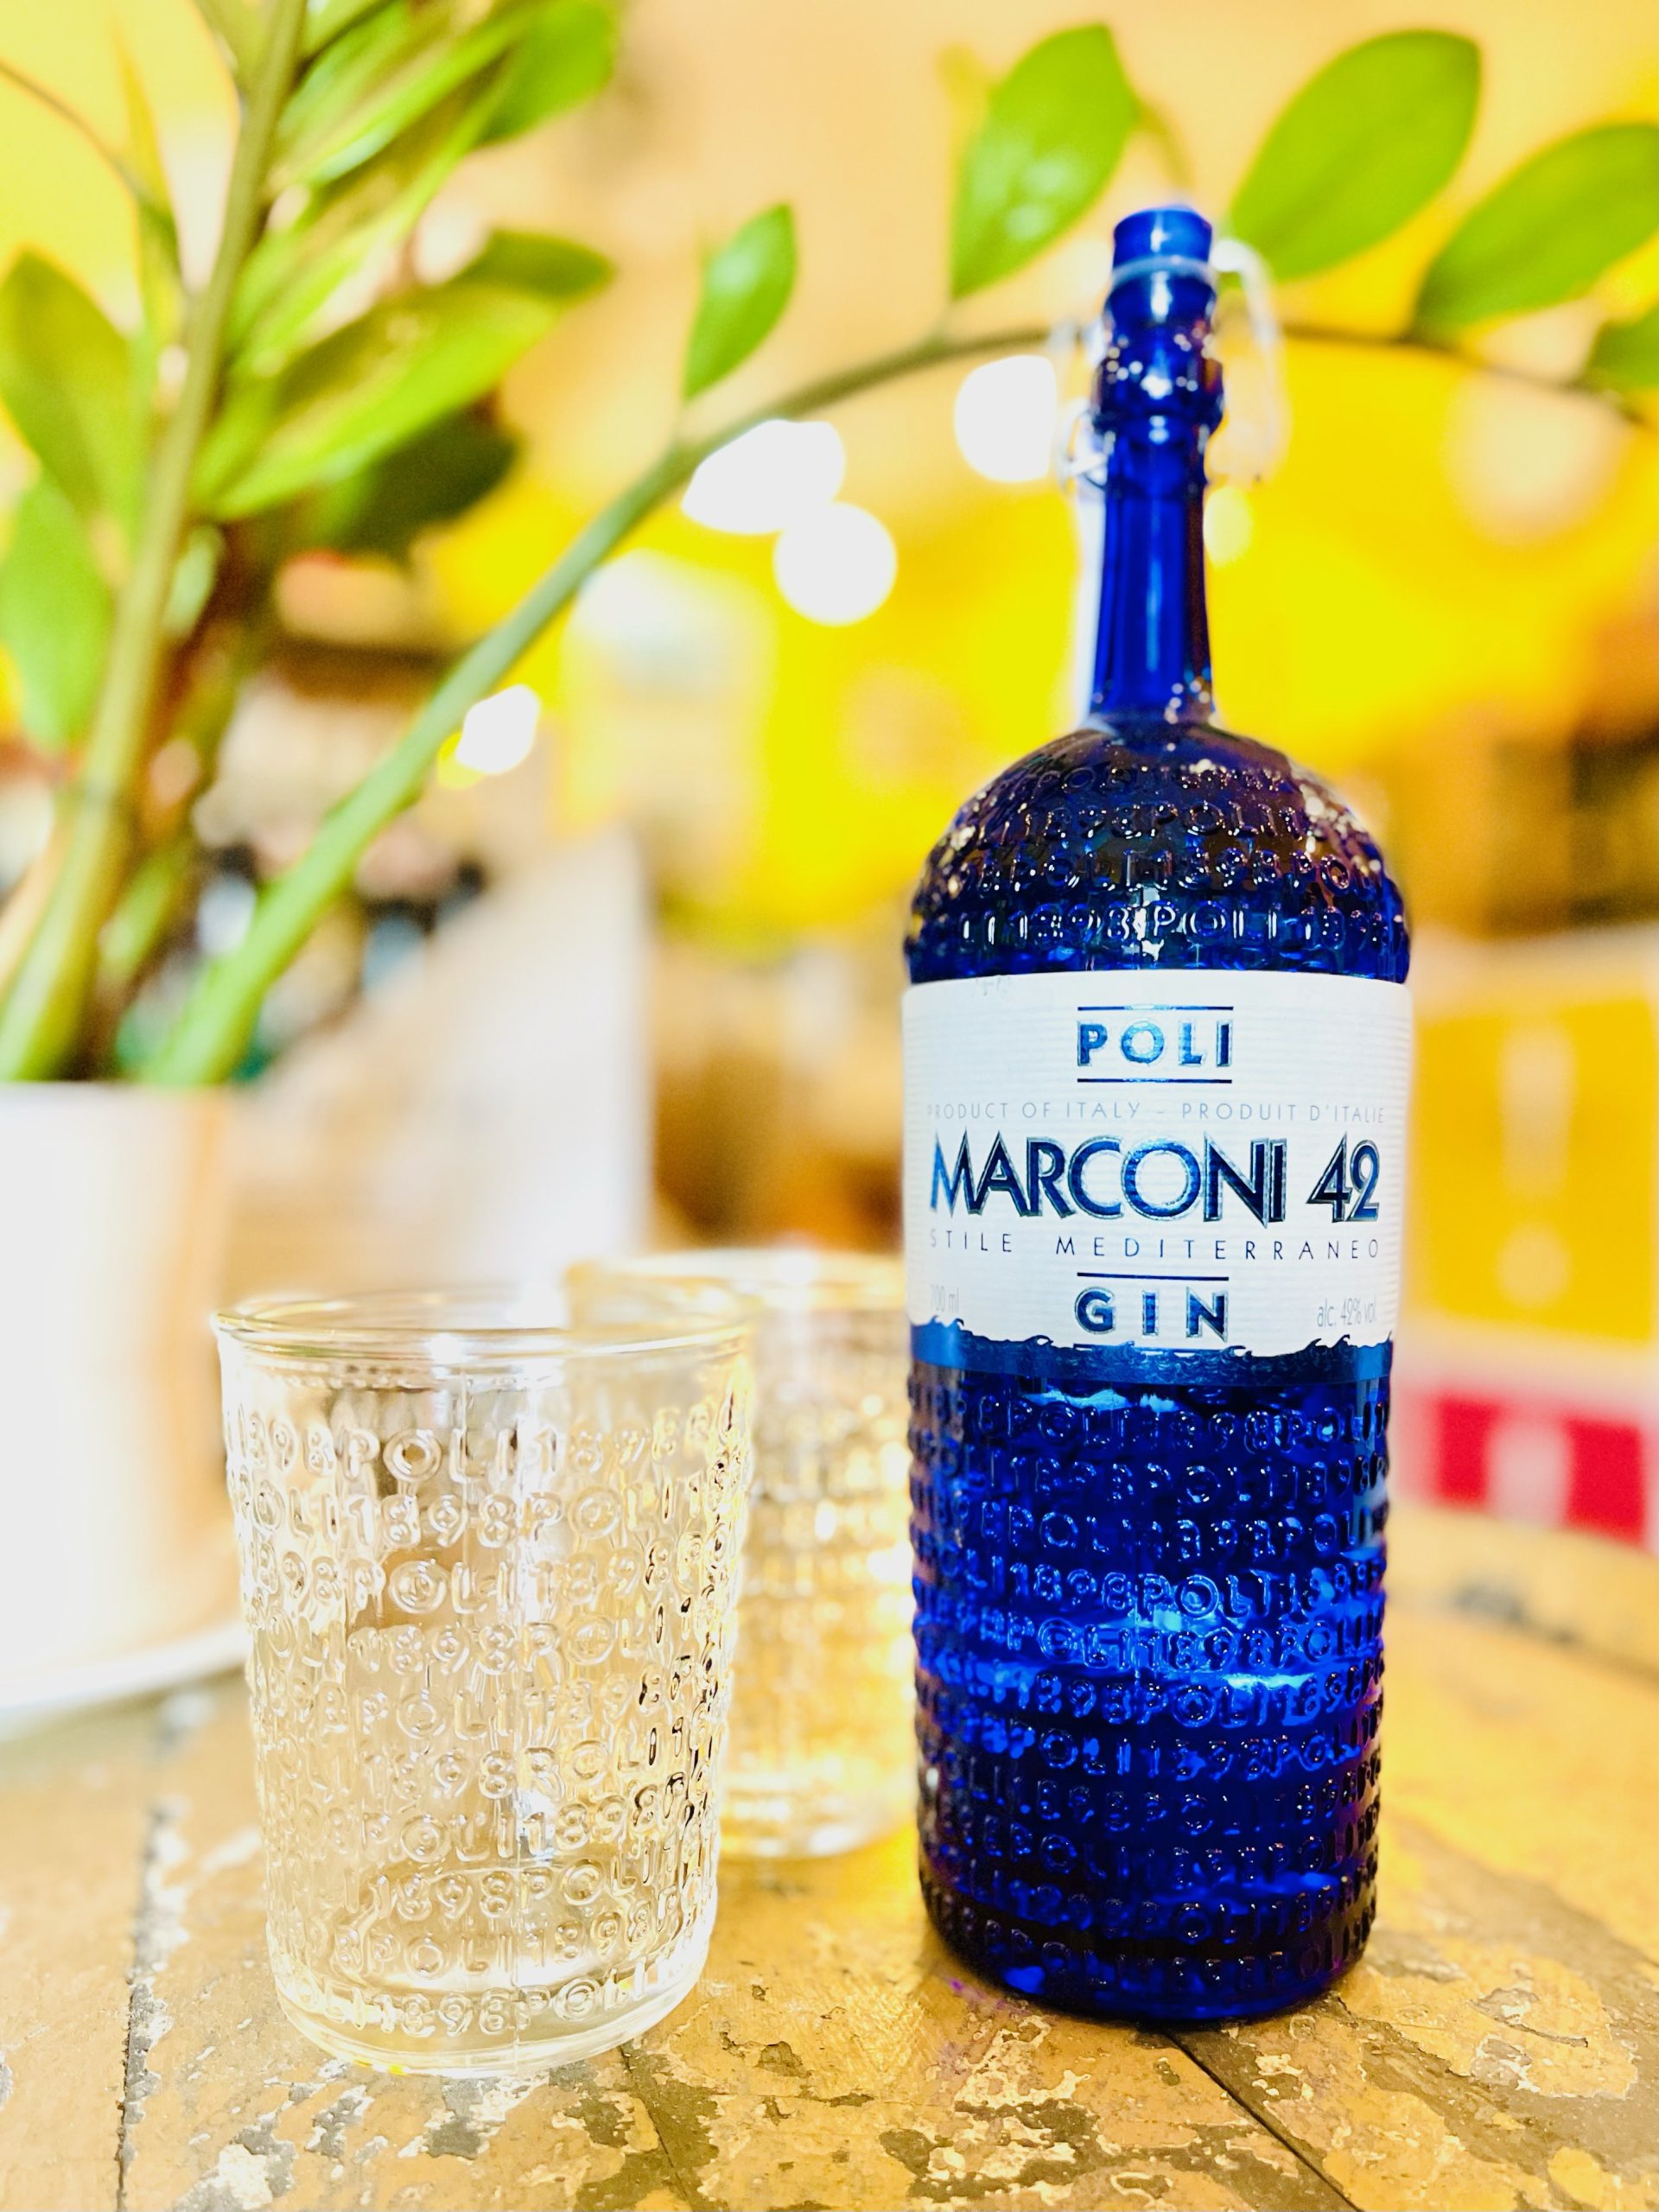 Poli Marconi 42 Mediterranean Gin, Italy